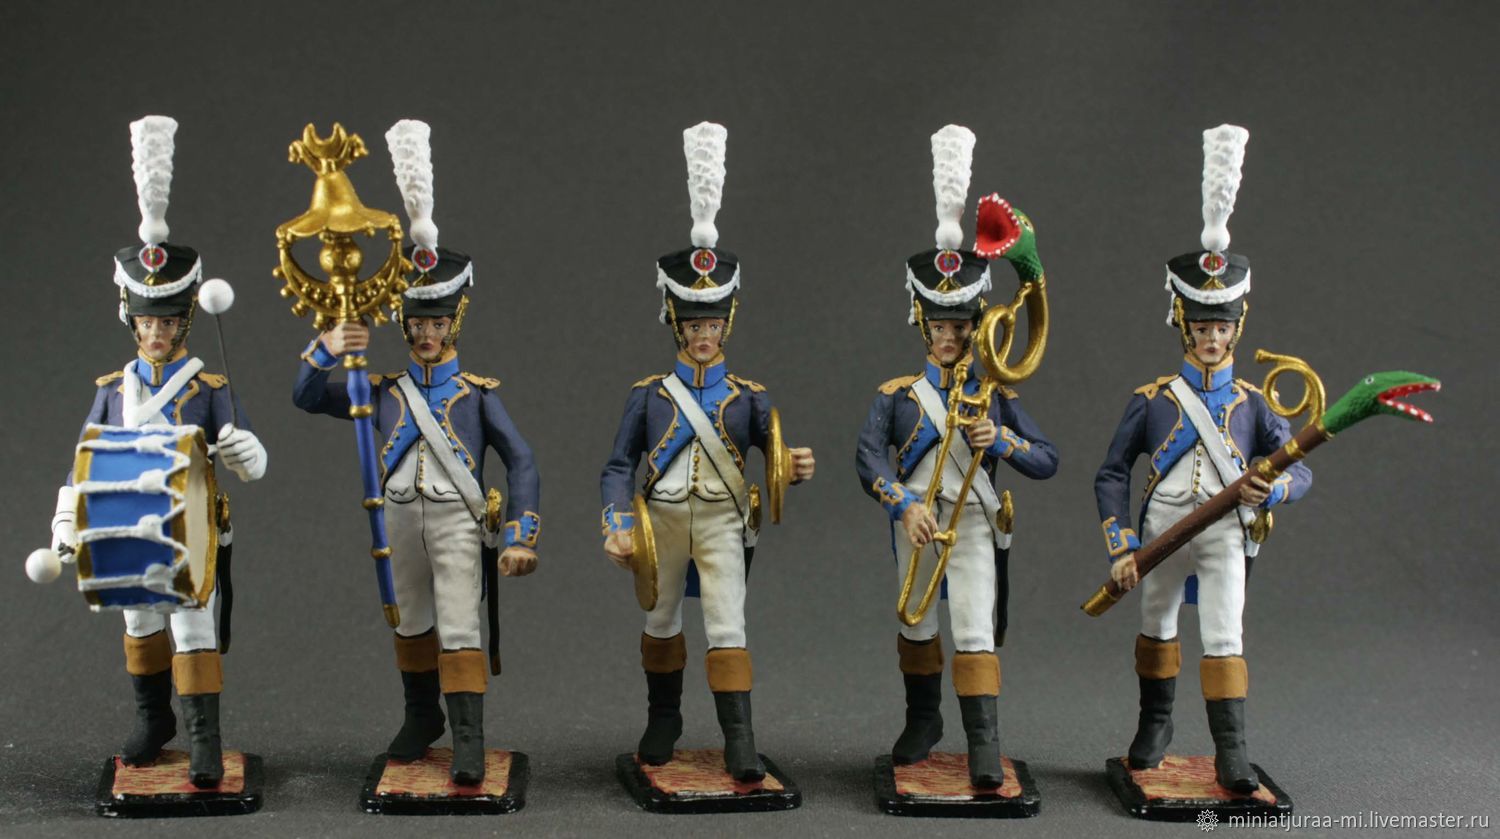 miniature soldier figures